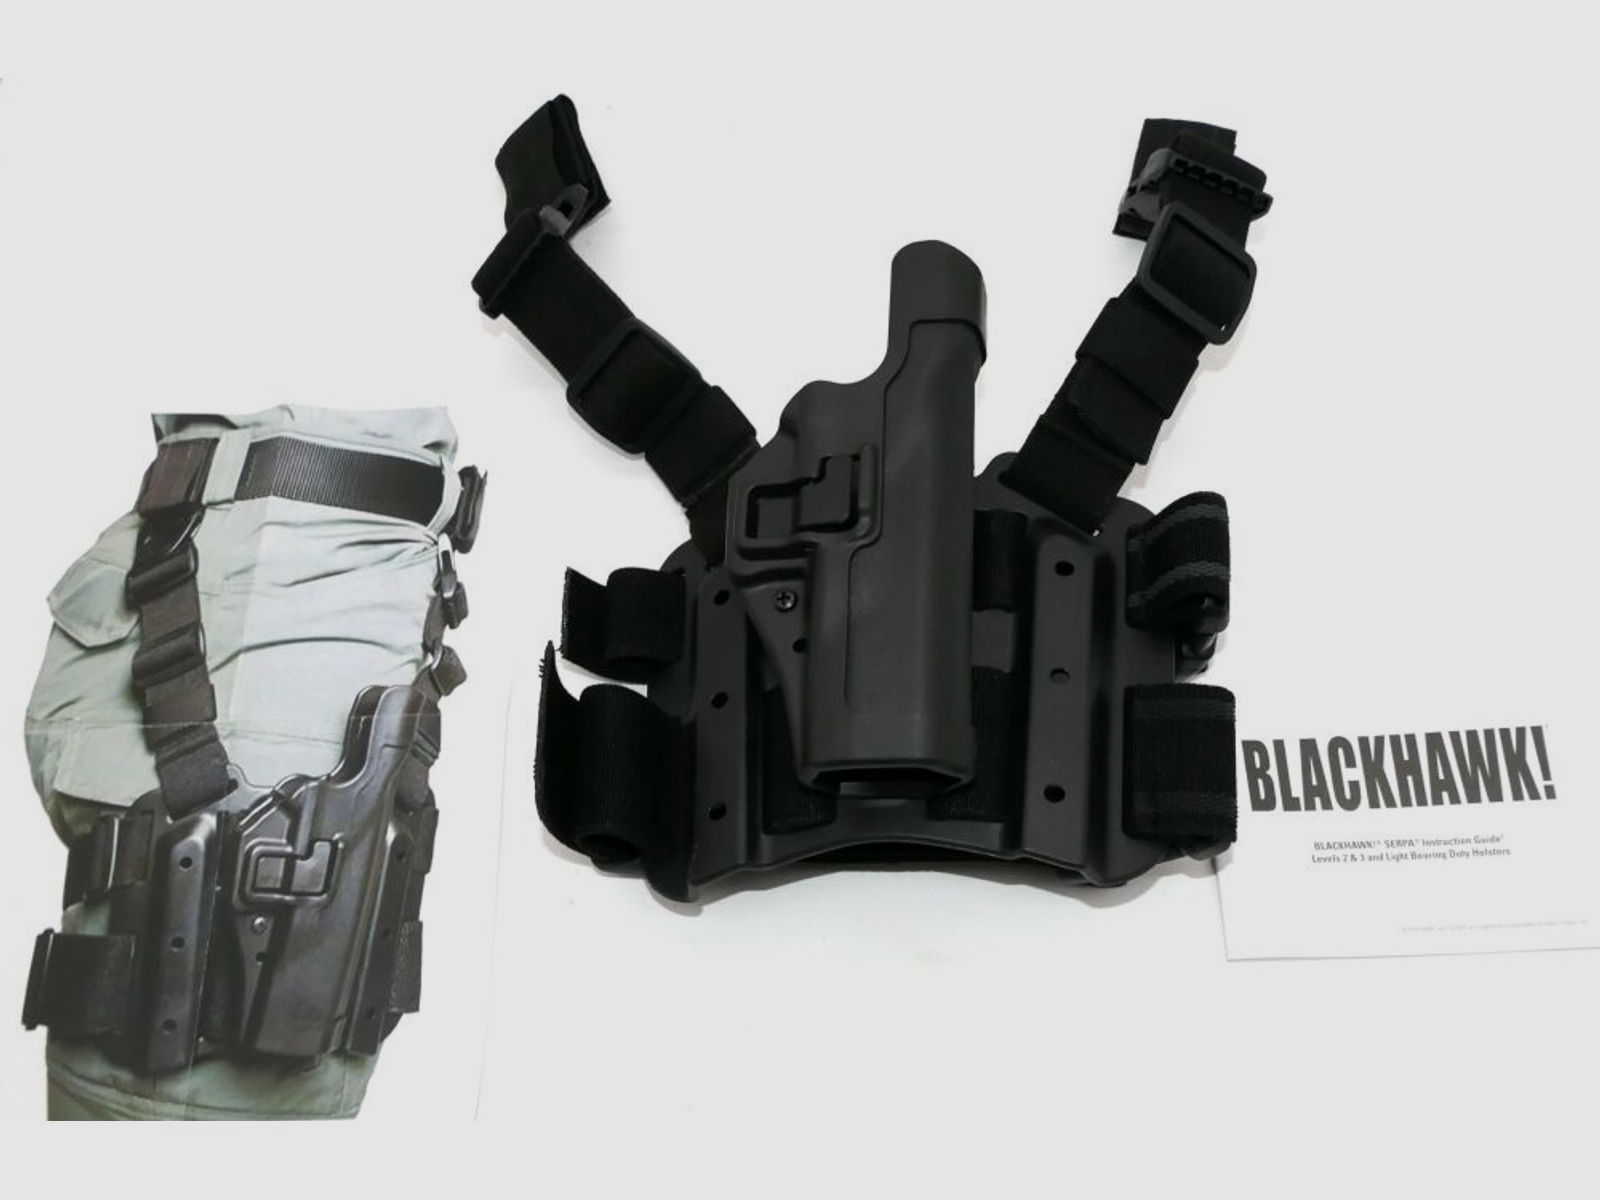 Blackhawk	 Blackhawk Glock Tactical Sepra Holster 17, 22, 19, 23, 31, 32 Rechts / Right